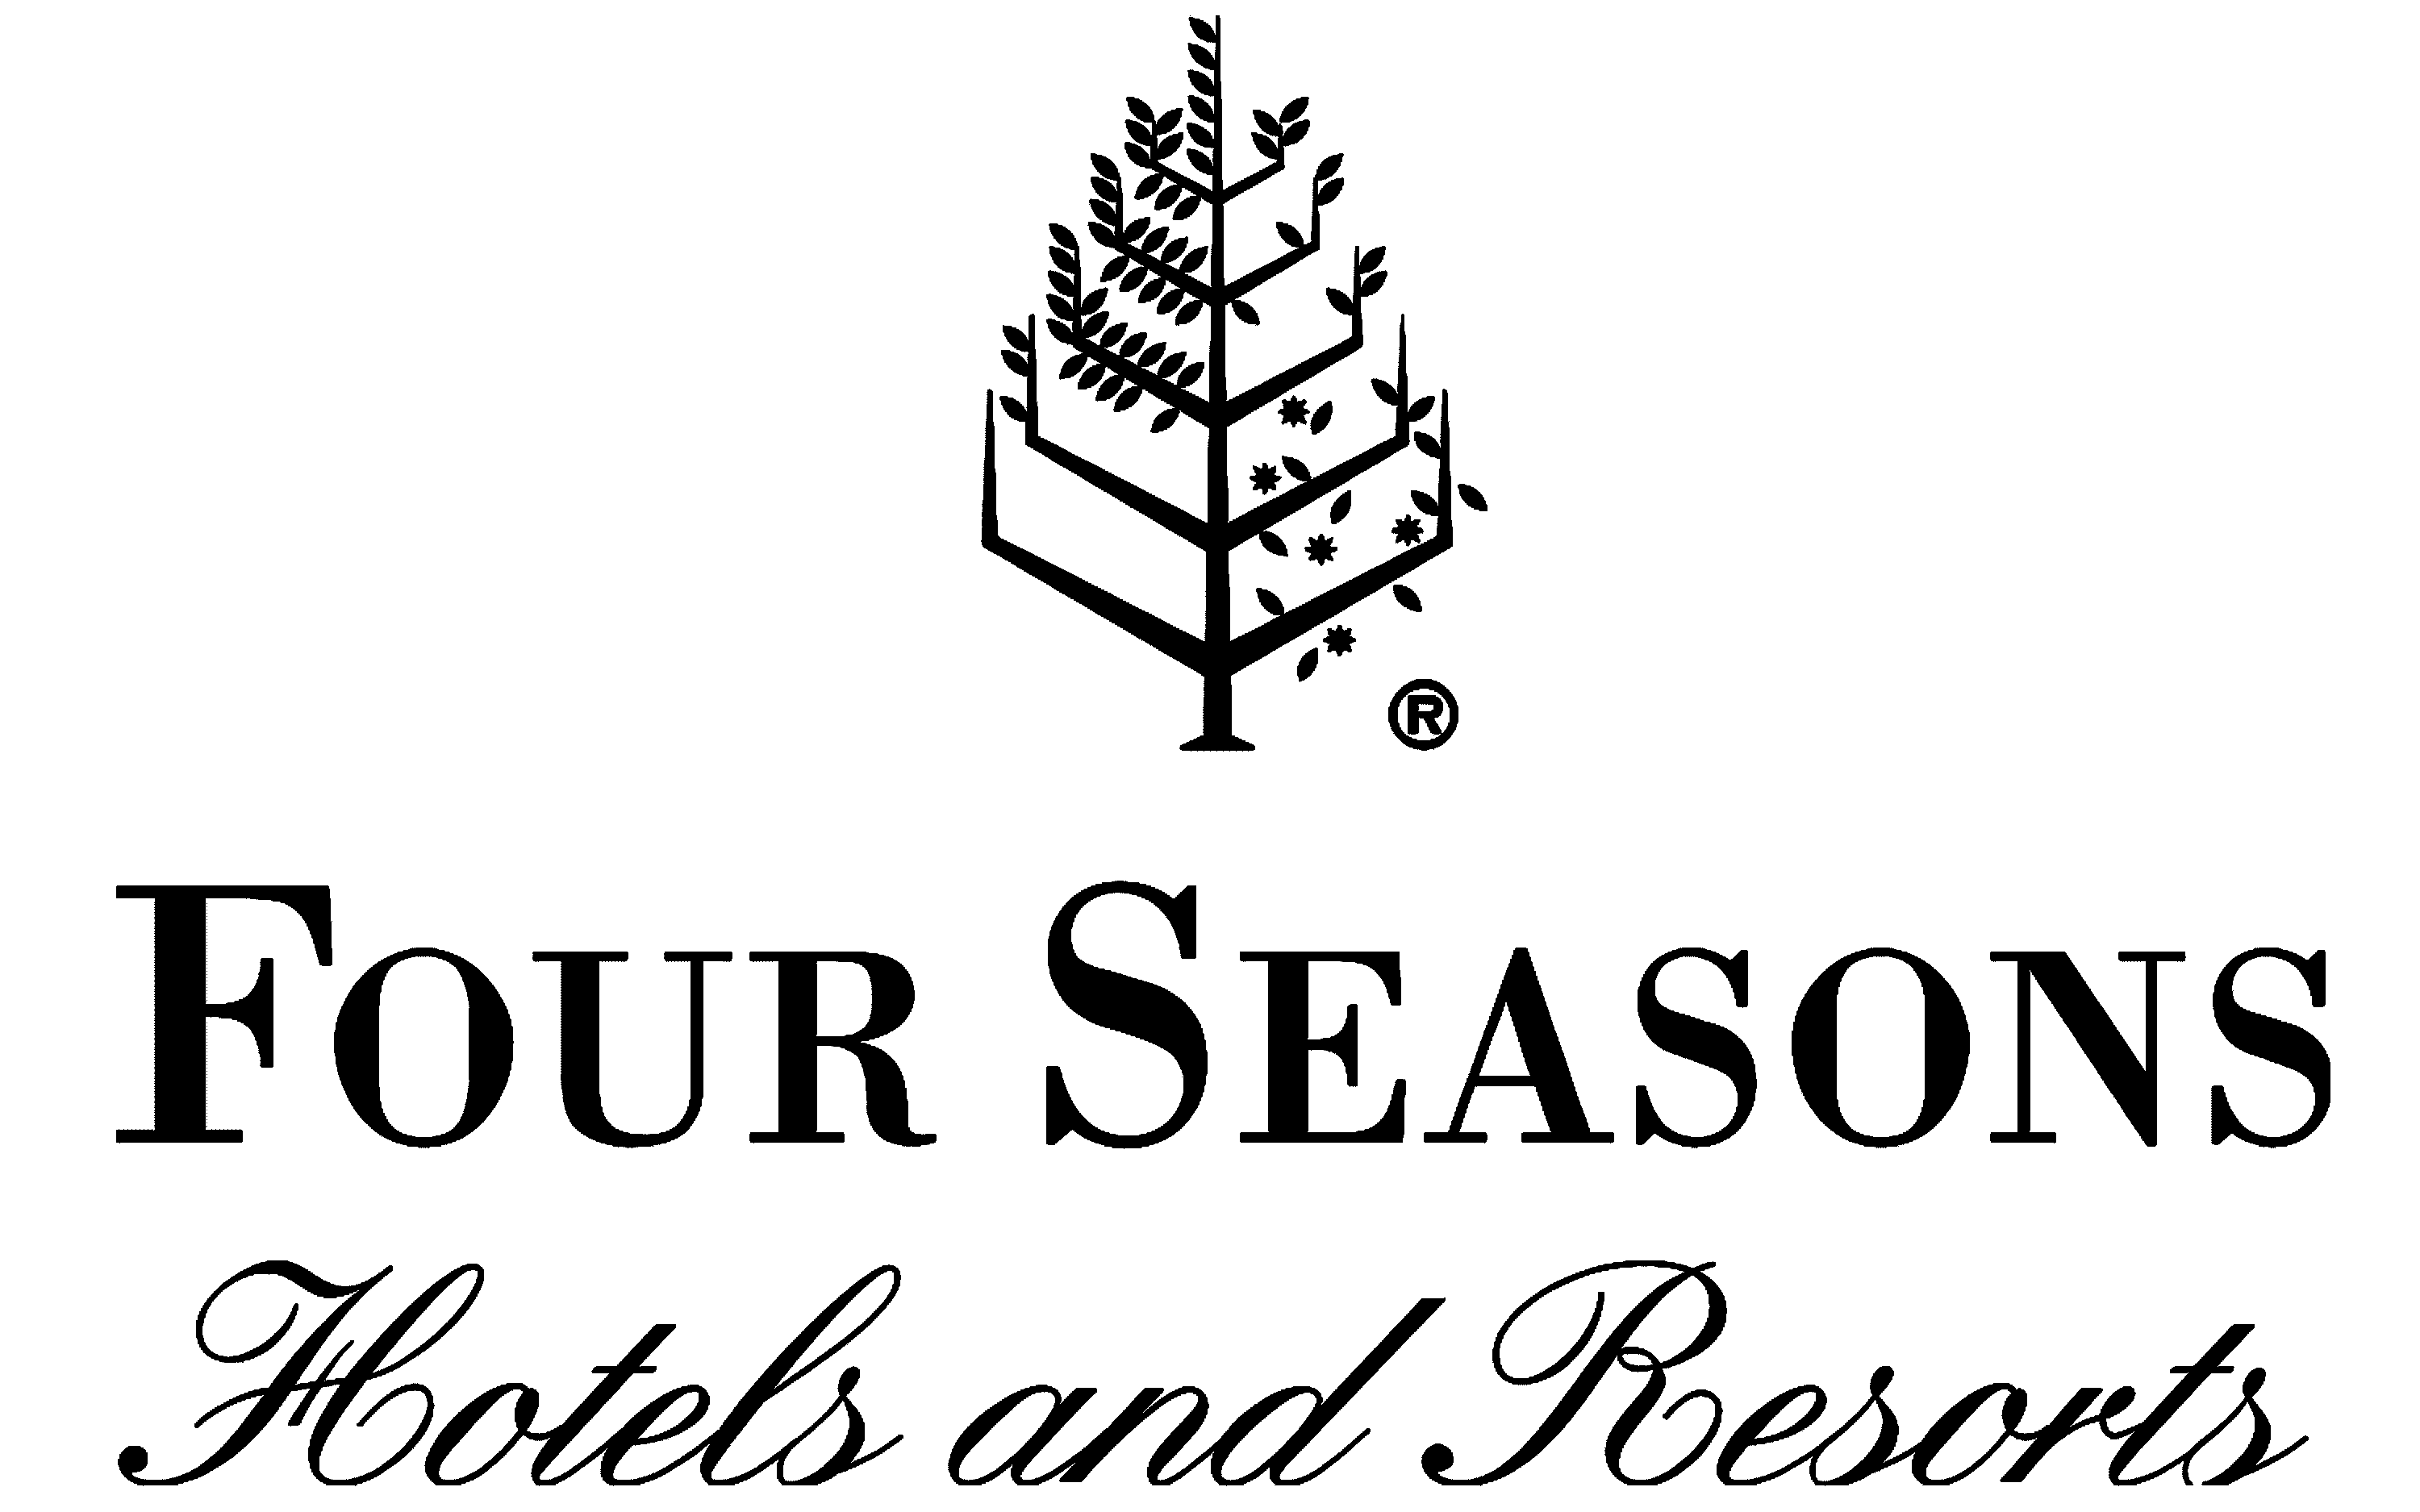 Four Seasons Hotels